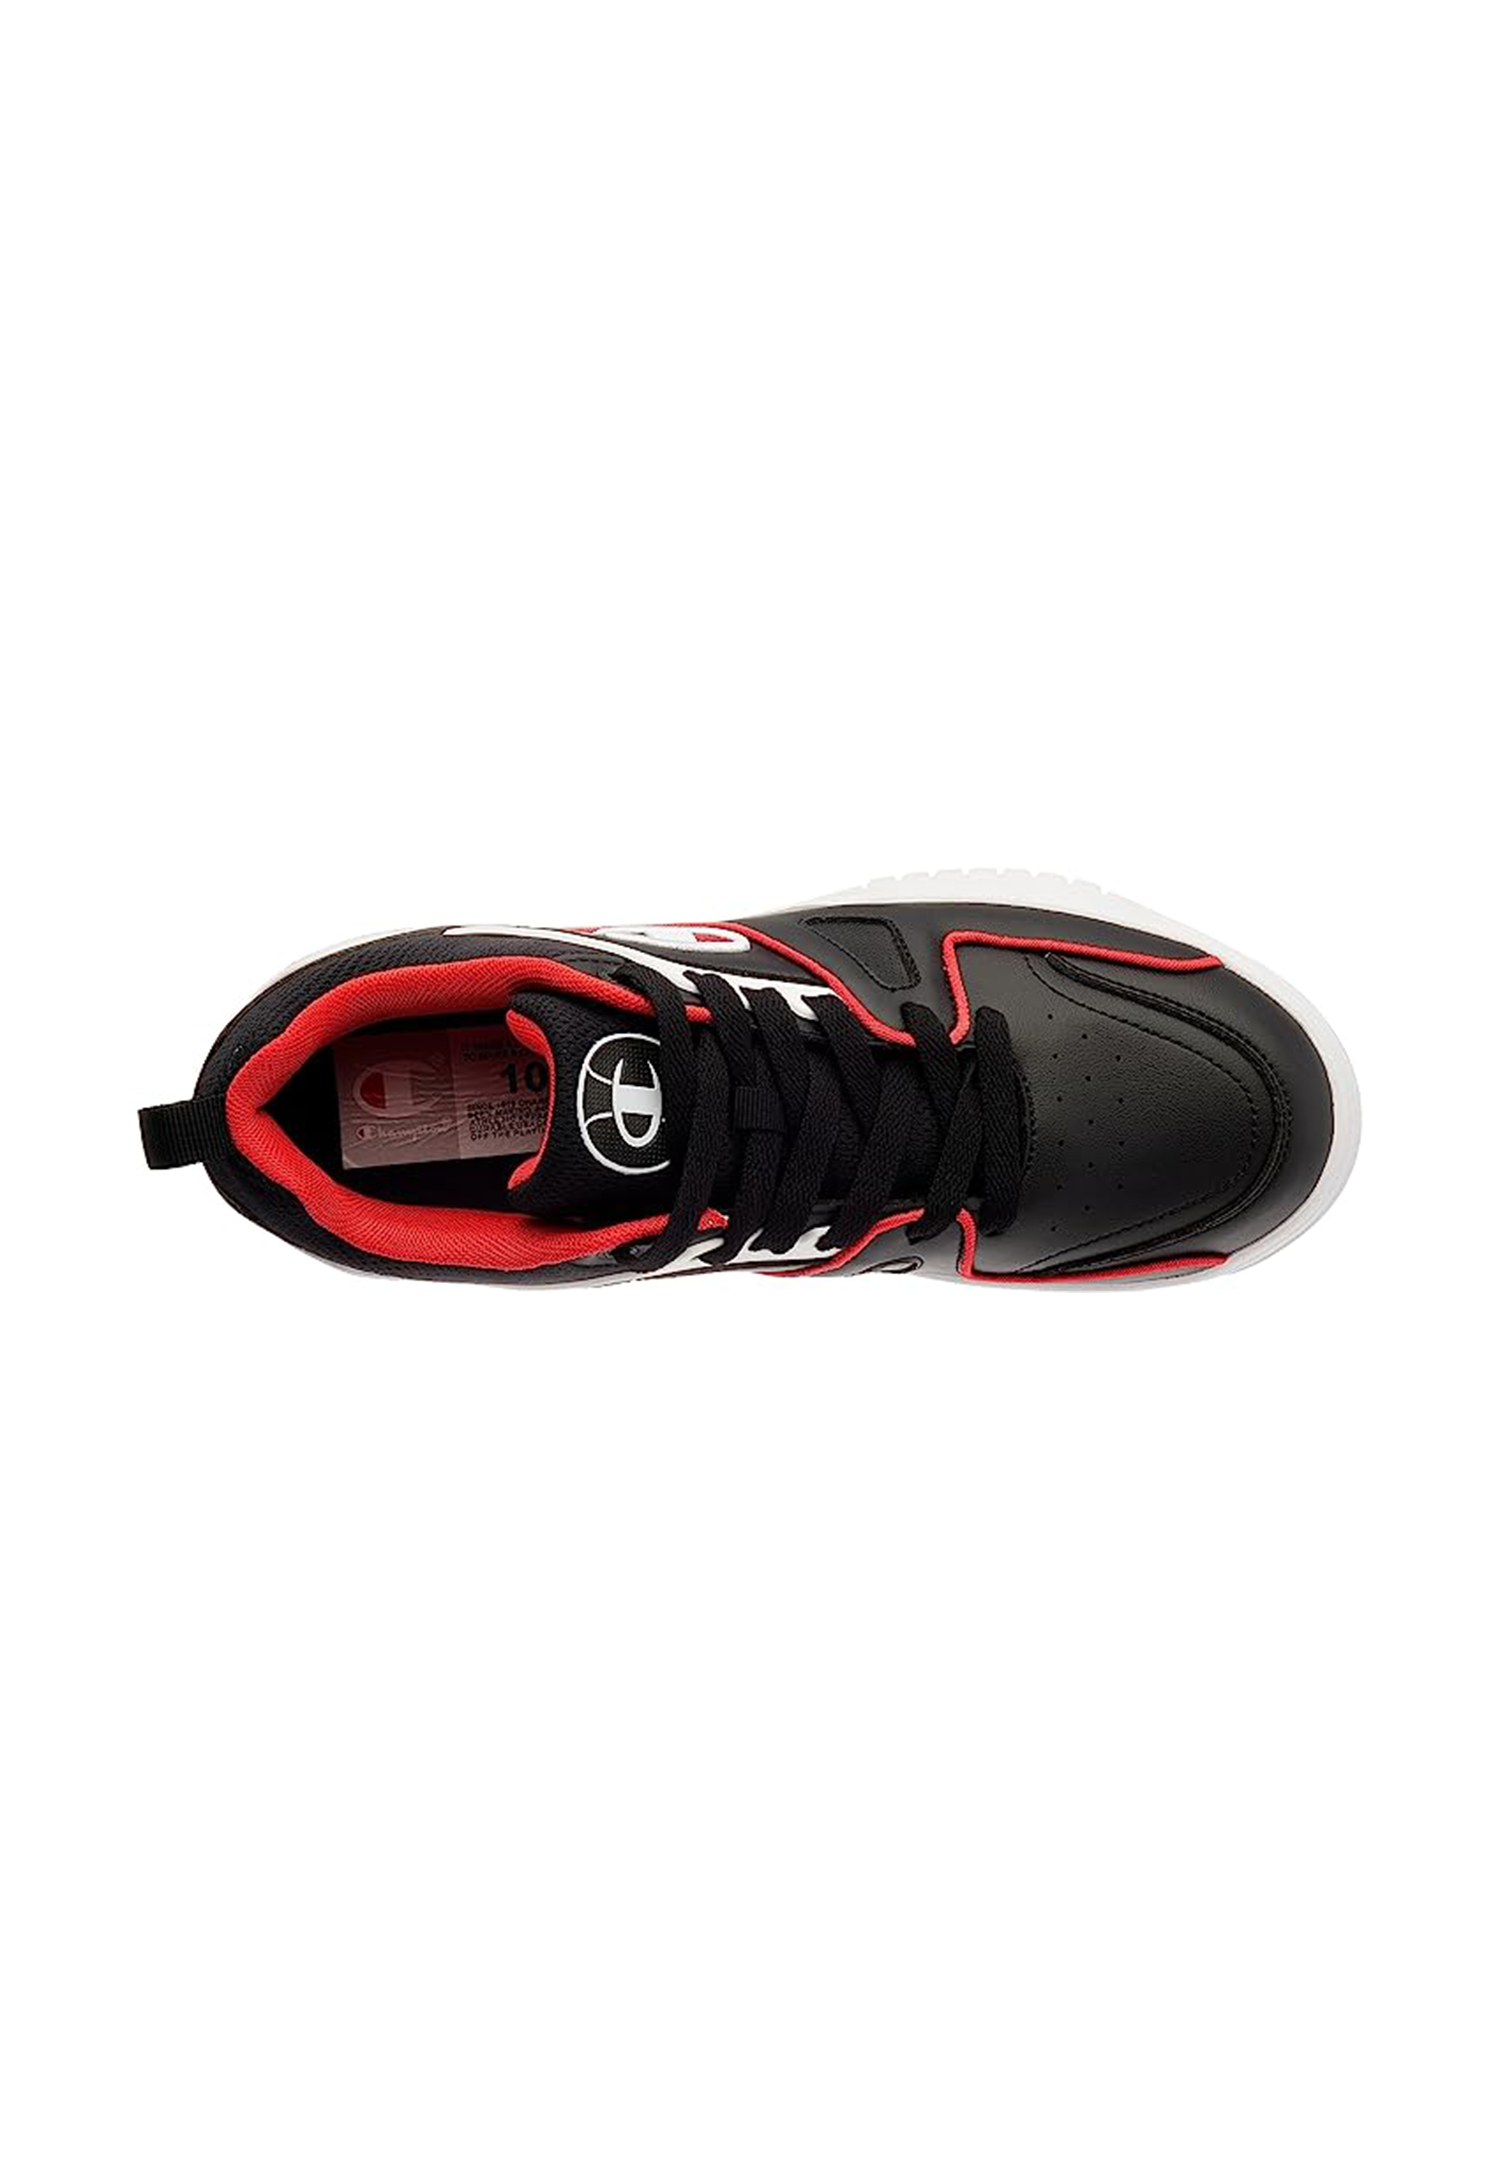 Champion 3 Point Low Herren Sneaker S21882-CHA-KK002 schwarz/rot 